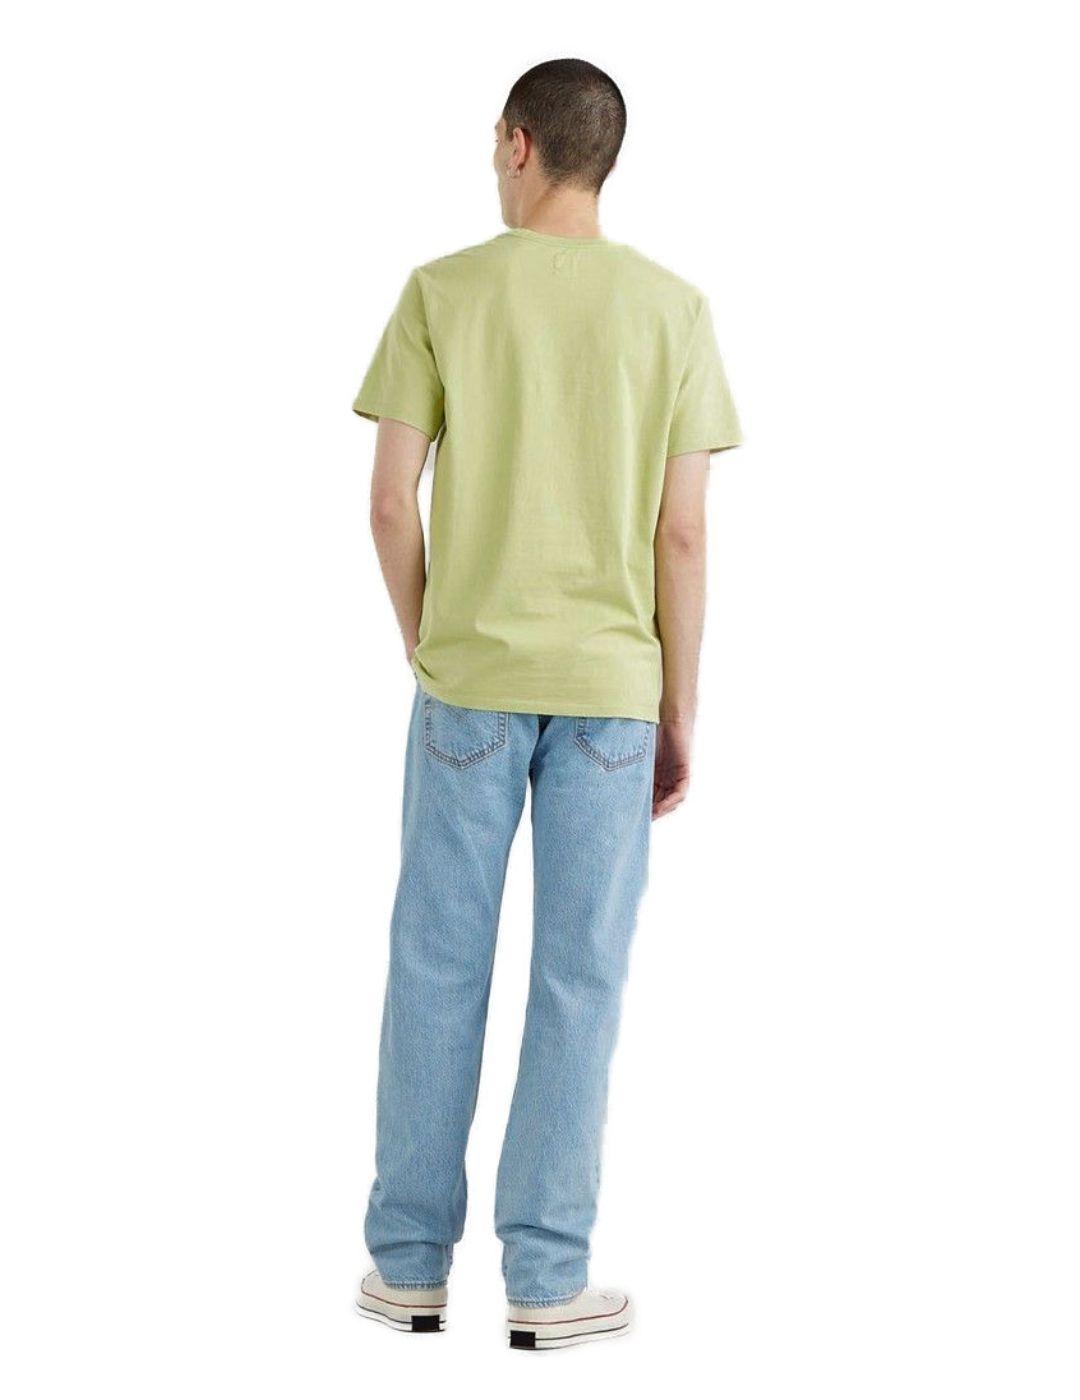 Camiseta Levis verde para hombre -a